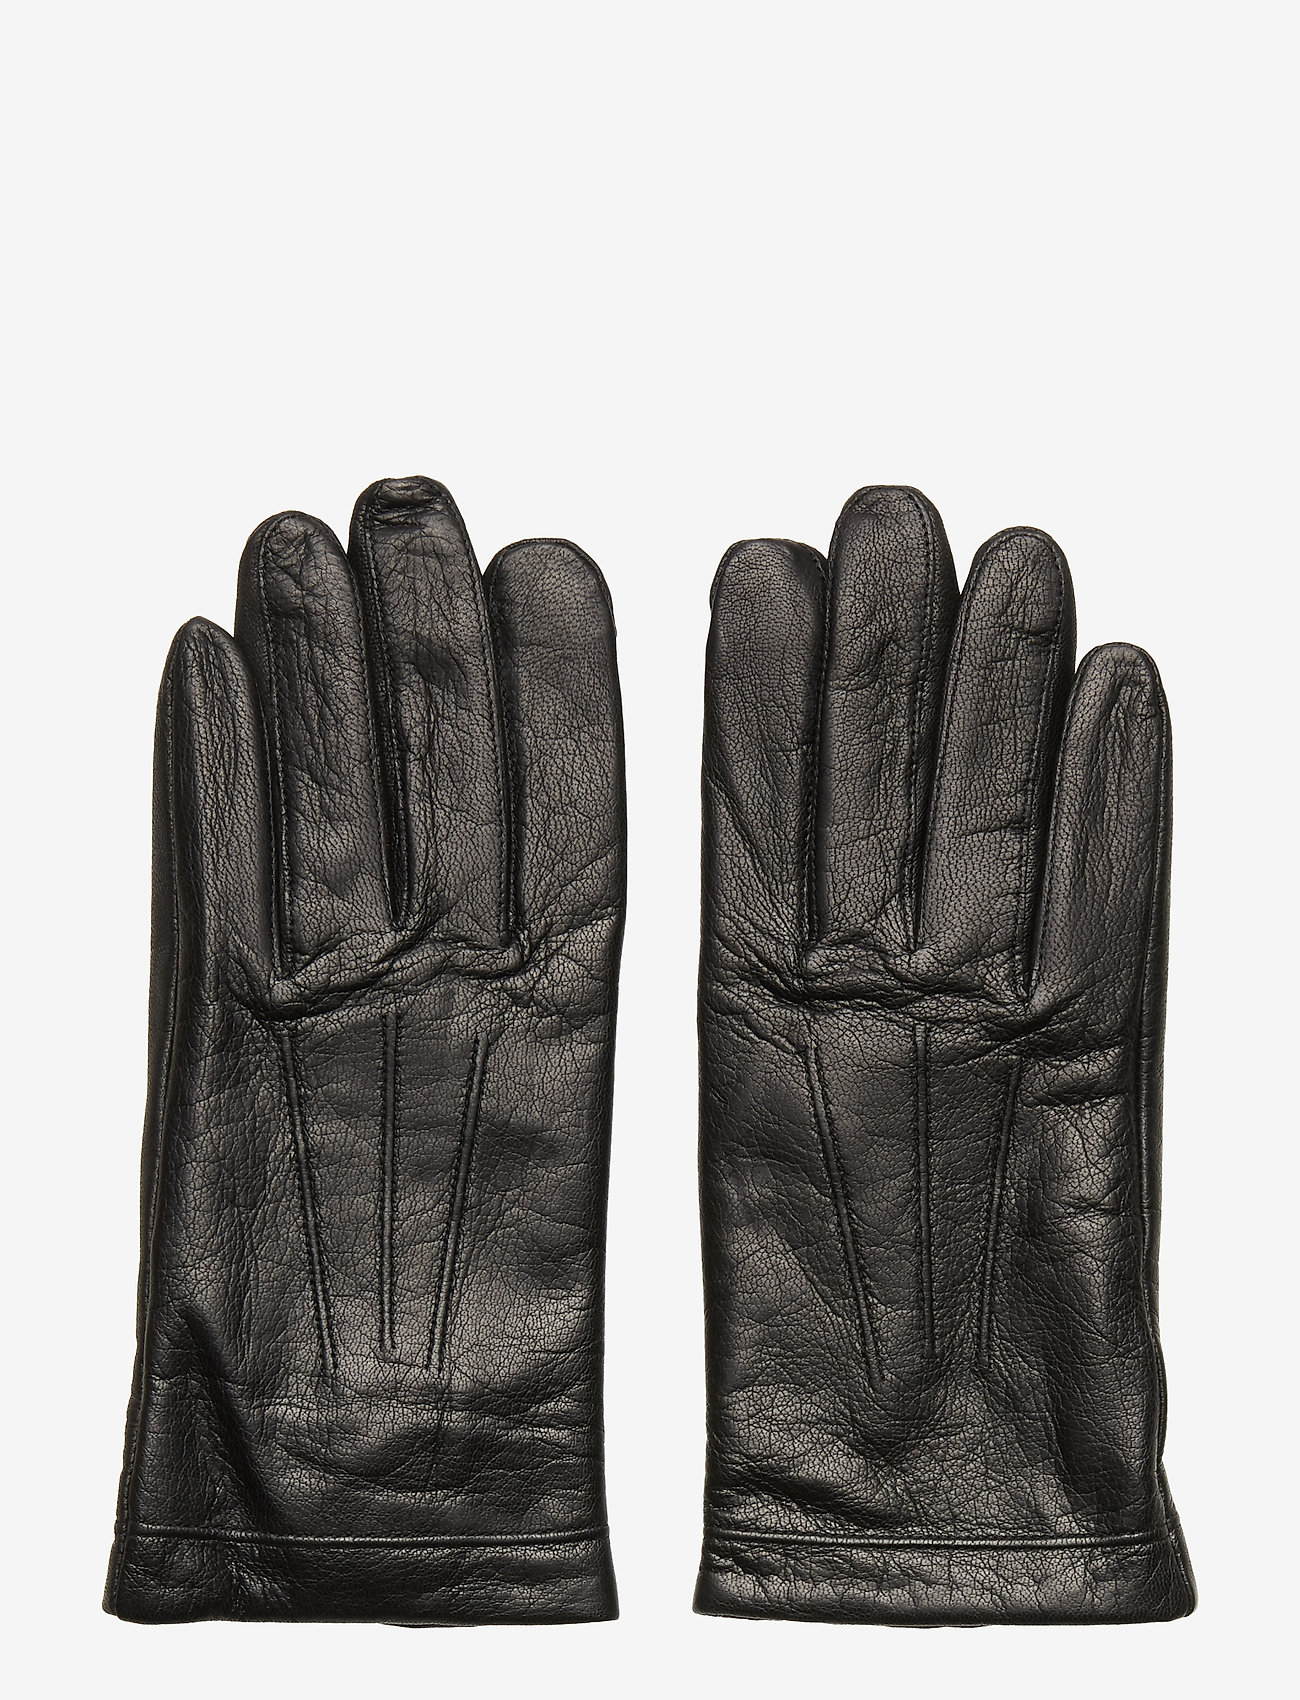 Amanda Christensen - Gloves - birthday gifts - black - 0